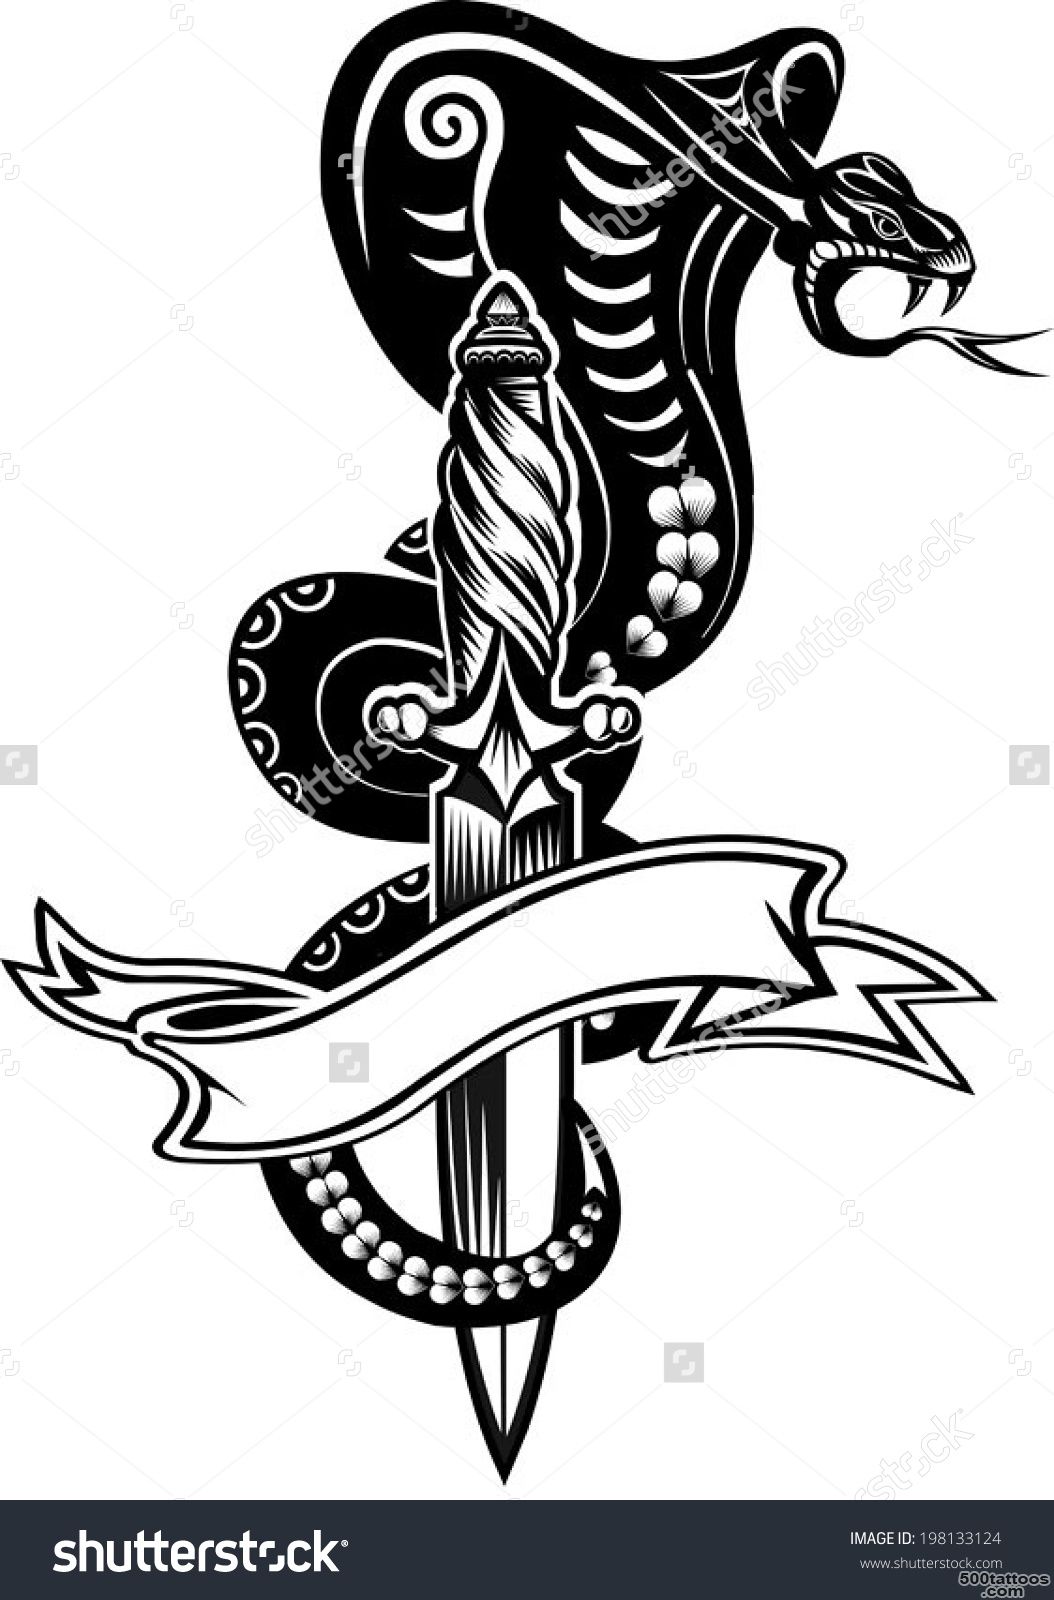 Snake Tattoo Cobra And Dagger Stock Vector Illustration 198133124 ..._41